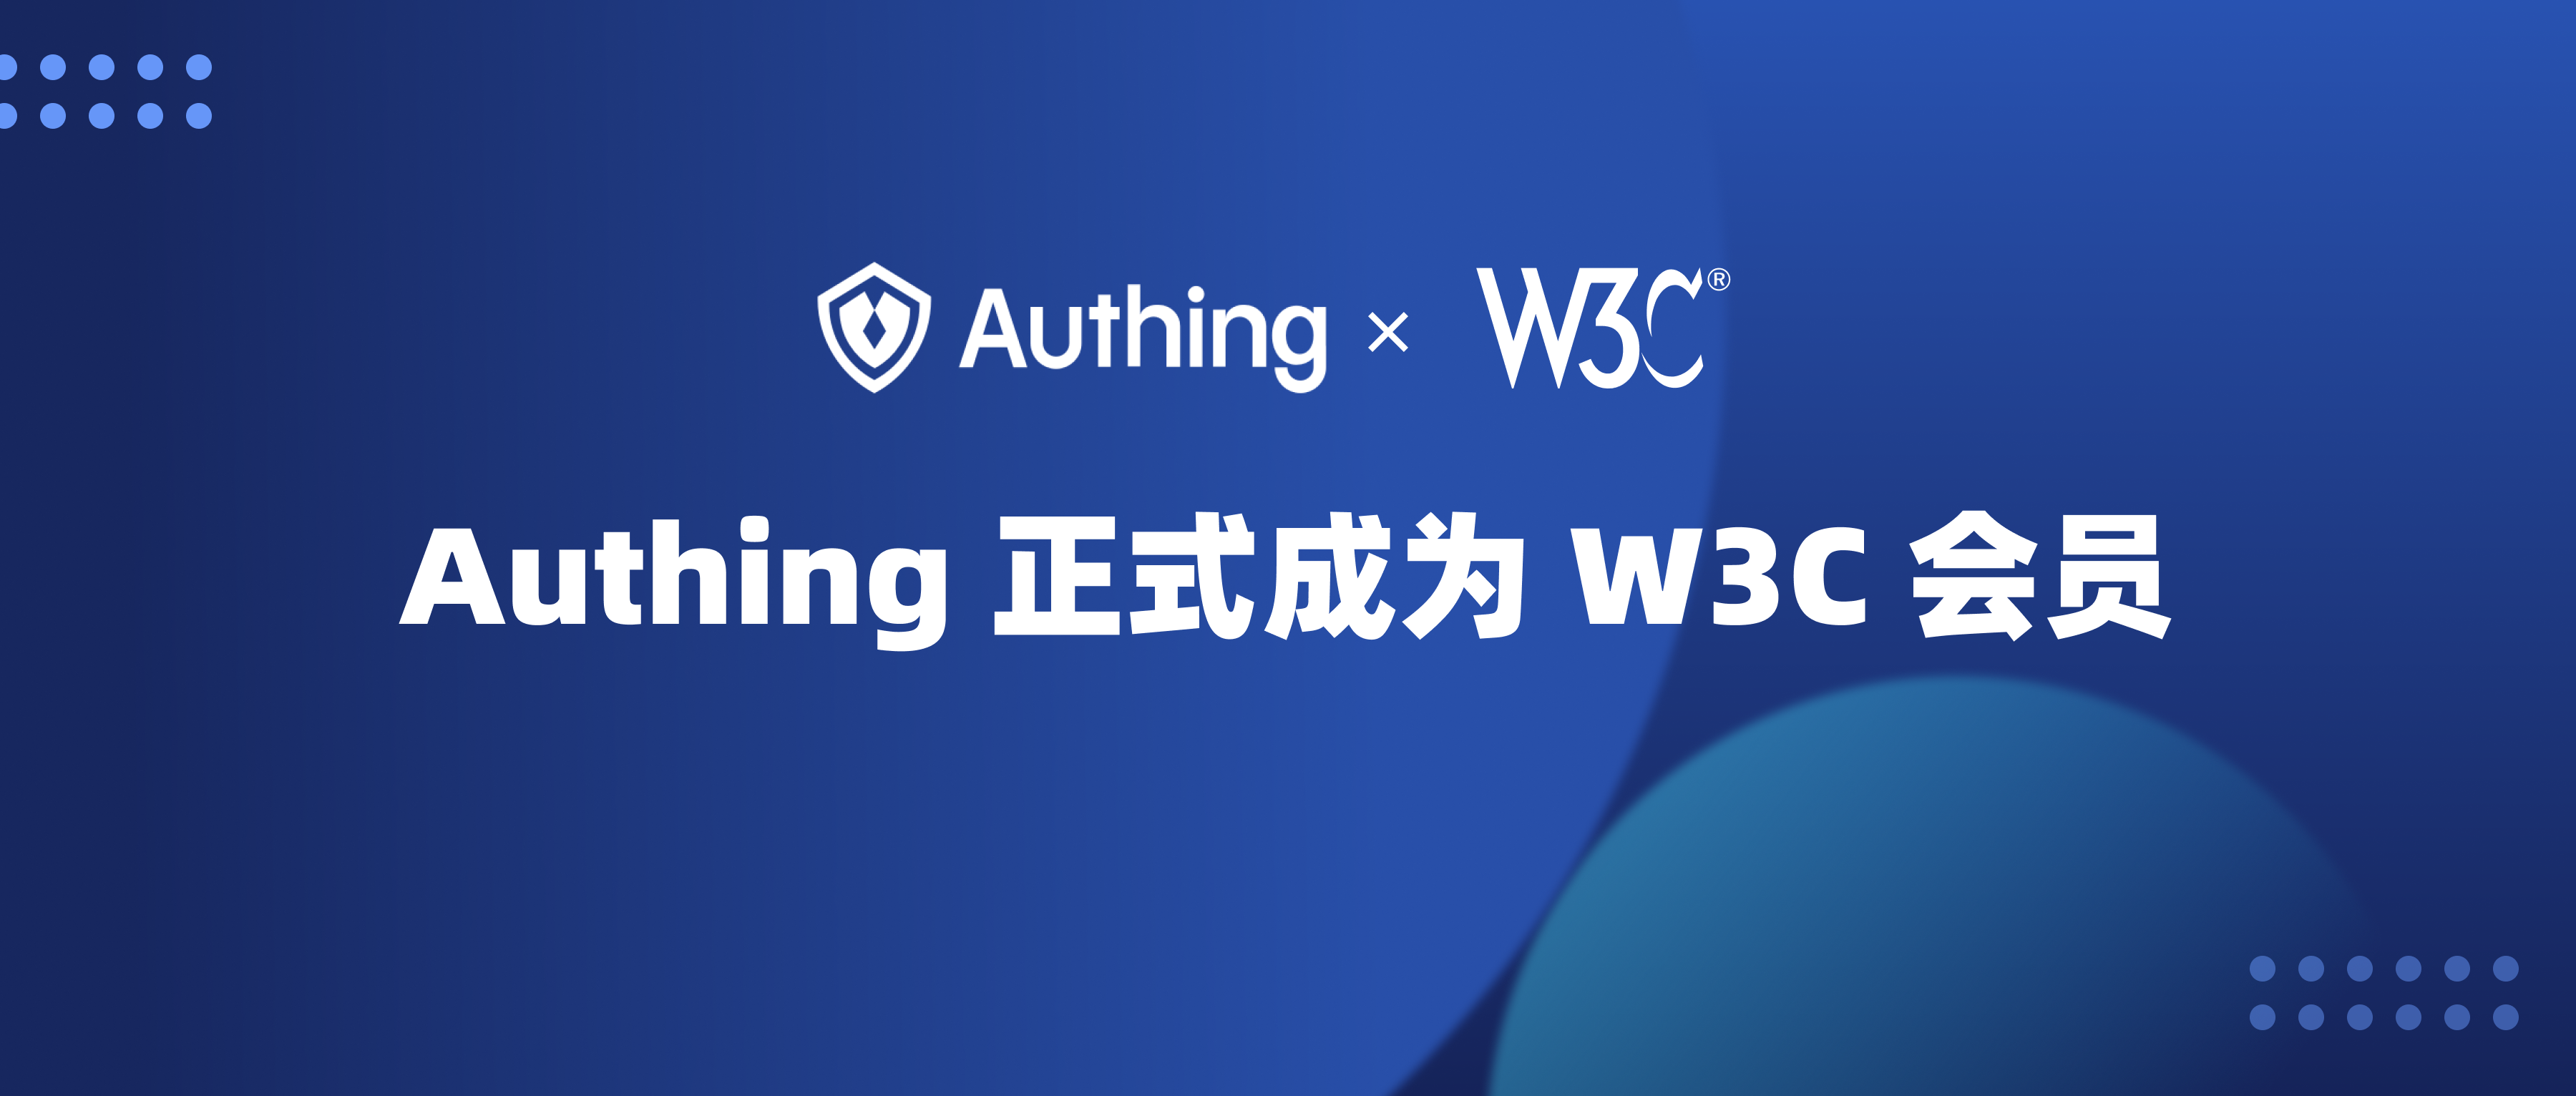 Authing 正式加入 W3C 组织，将参与相关国际标准制定